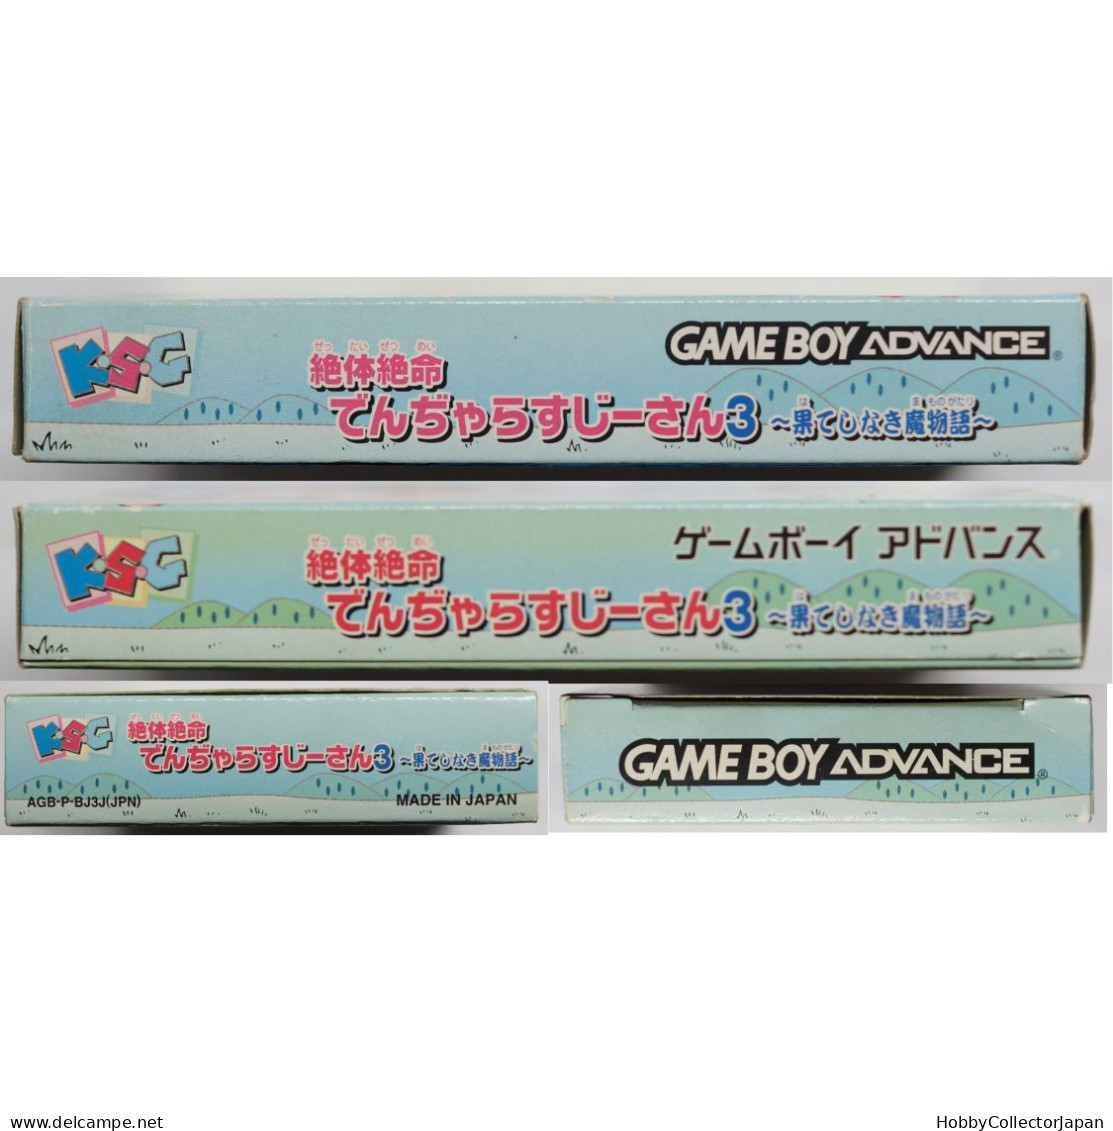 Zettai Zetsumei Dangerous Jiisan 3: Hateshinaki Mamonogatari AGB-BJ3J-JPN 4571137330903 Game Boy Advance - Game Boy Advance